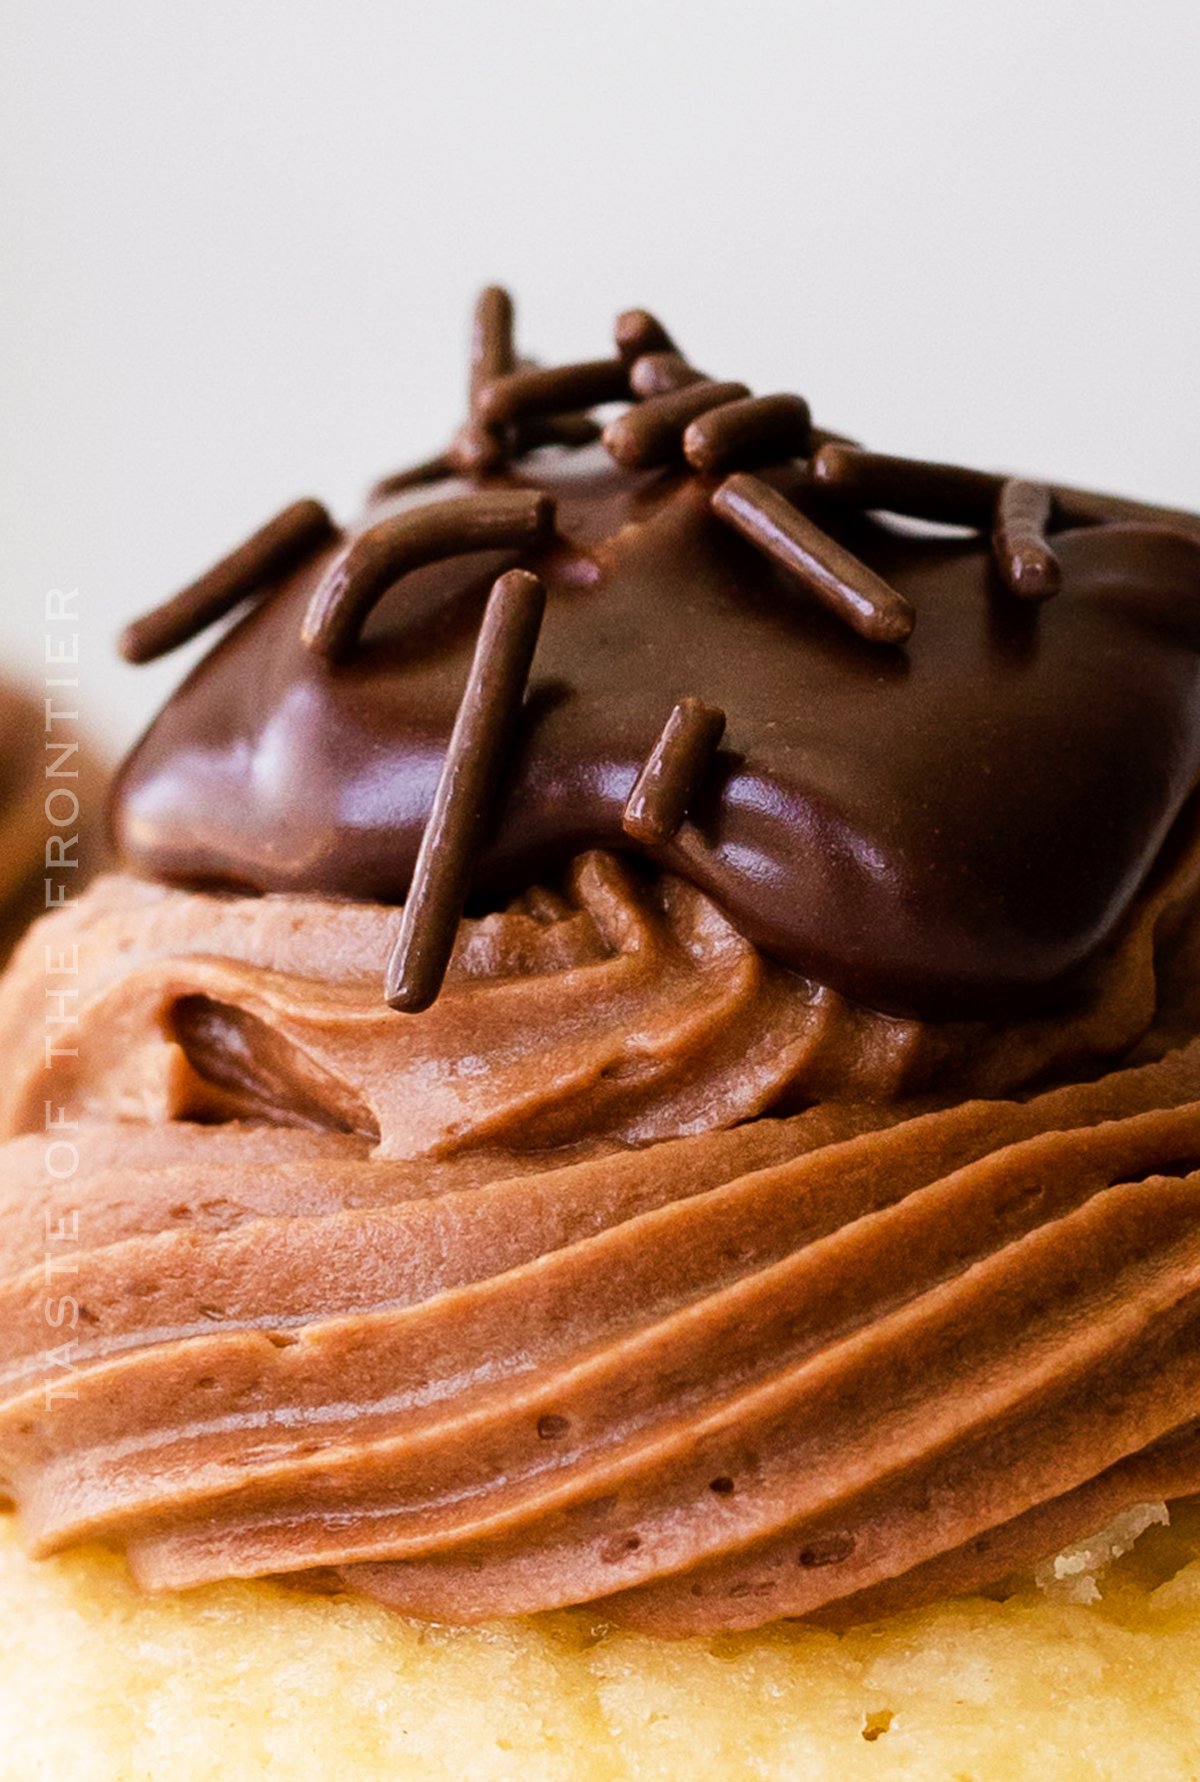 chocolate ganache on cupcake